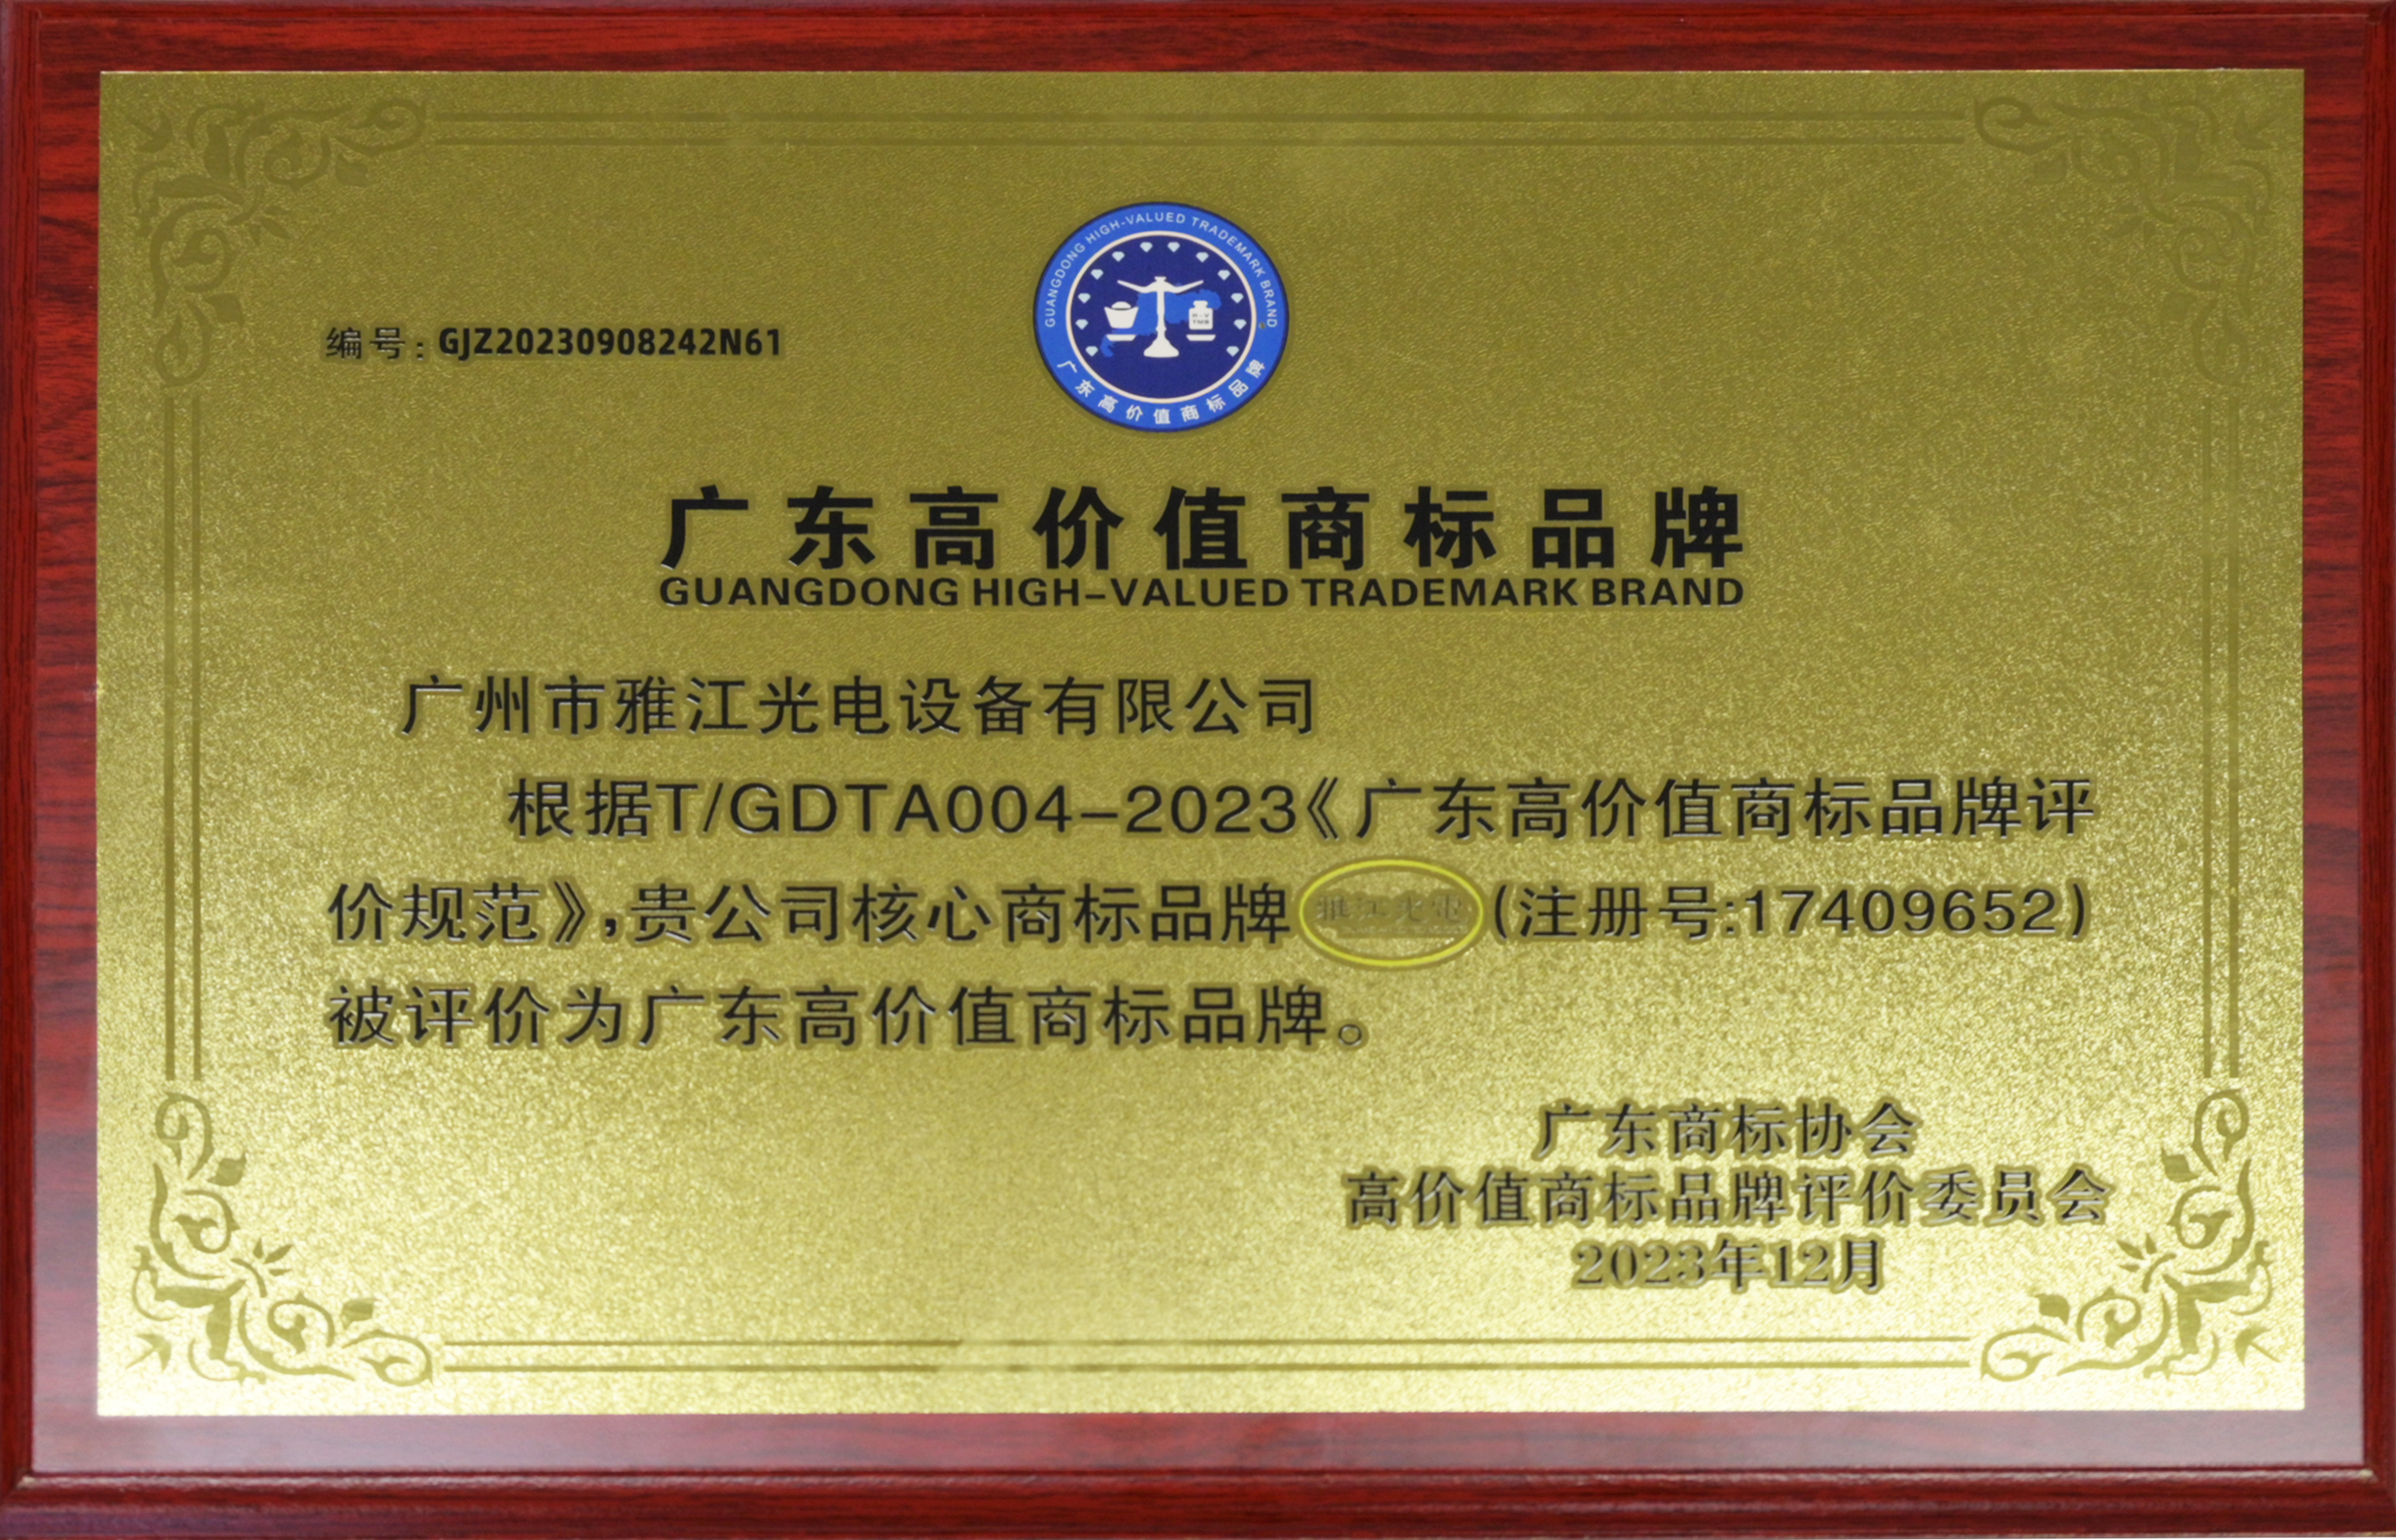 Guangdong high value trademark brand